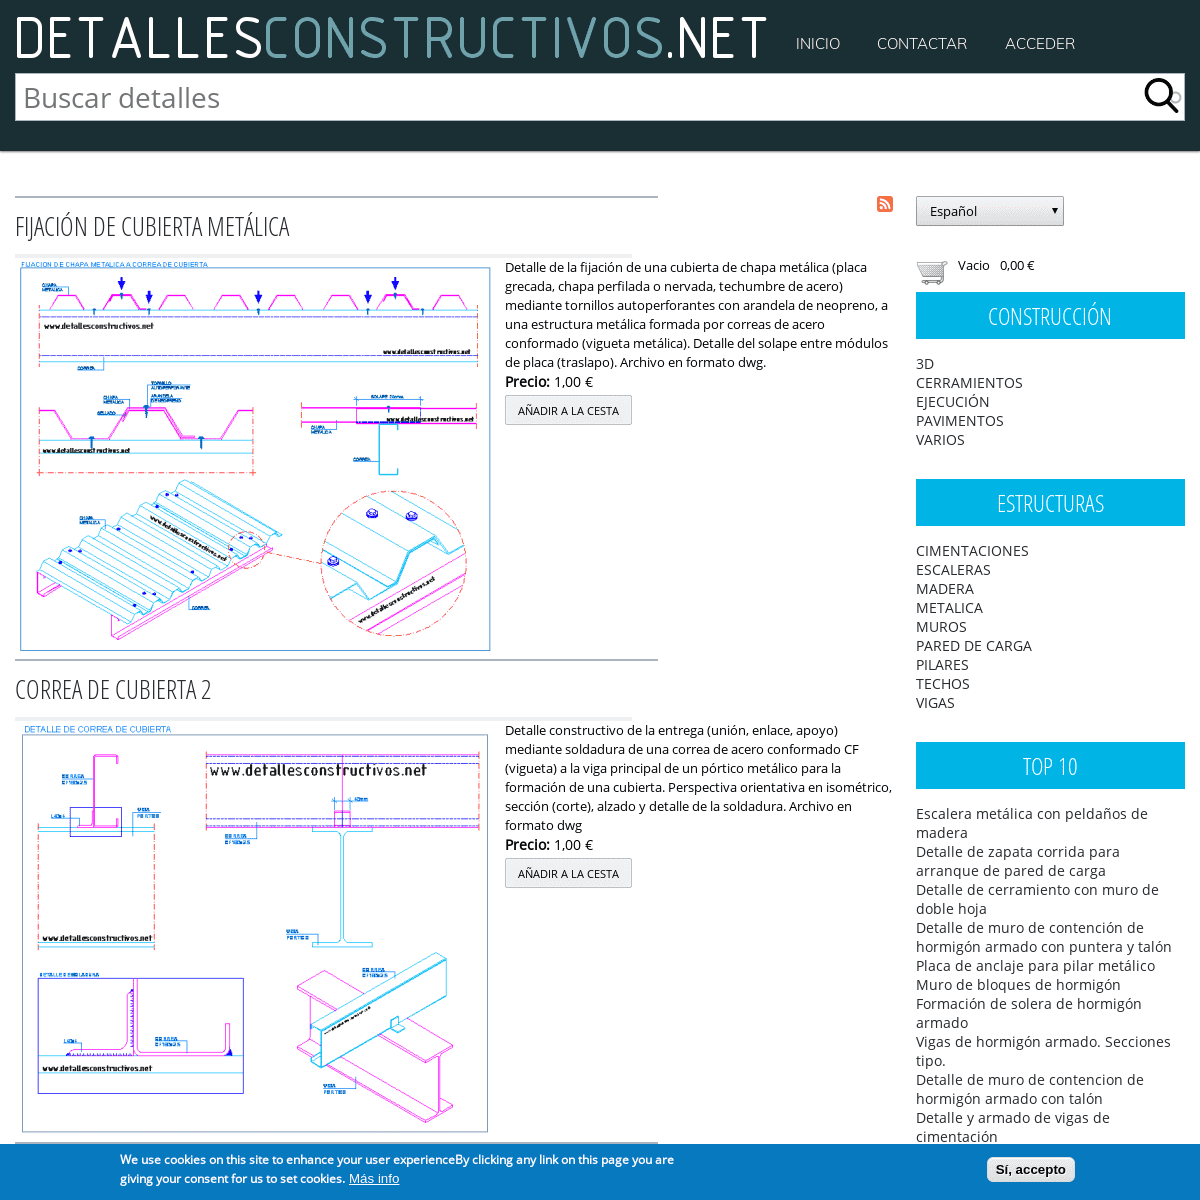 A complete backup of detallesconstructivos.net